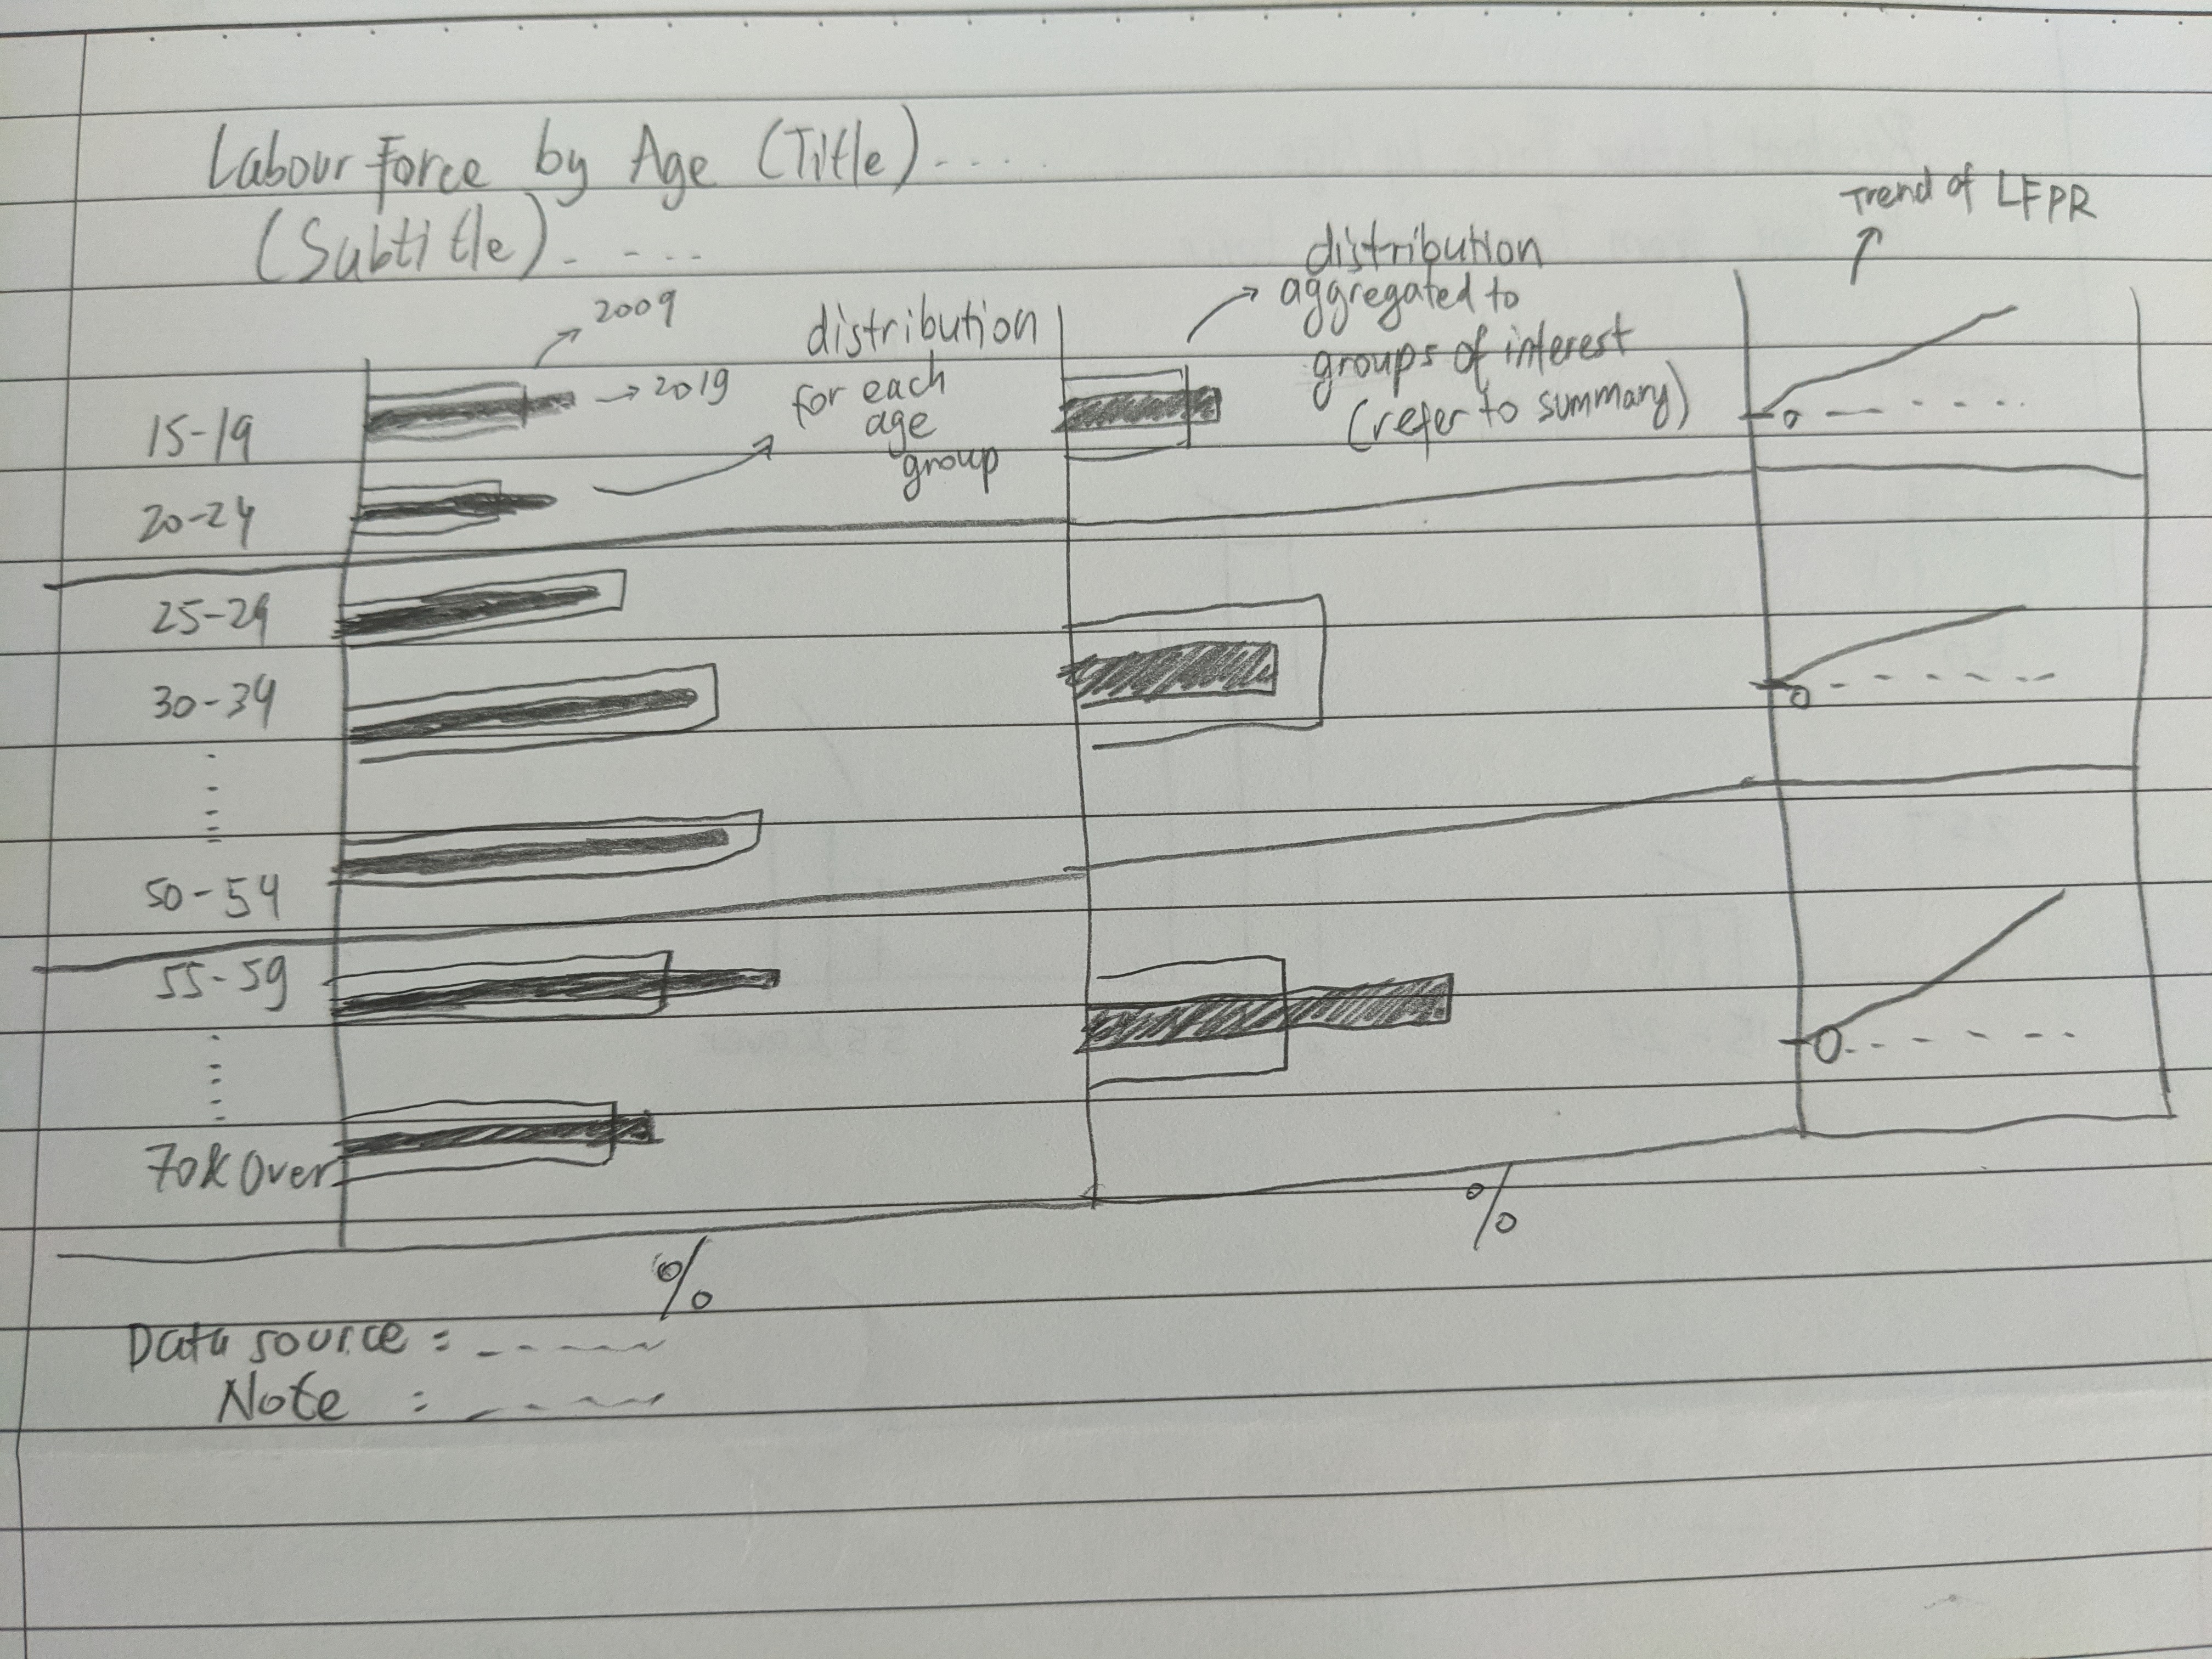 Sketch of proposed visualisation